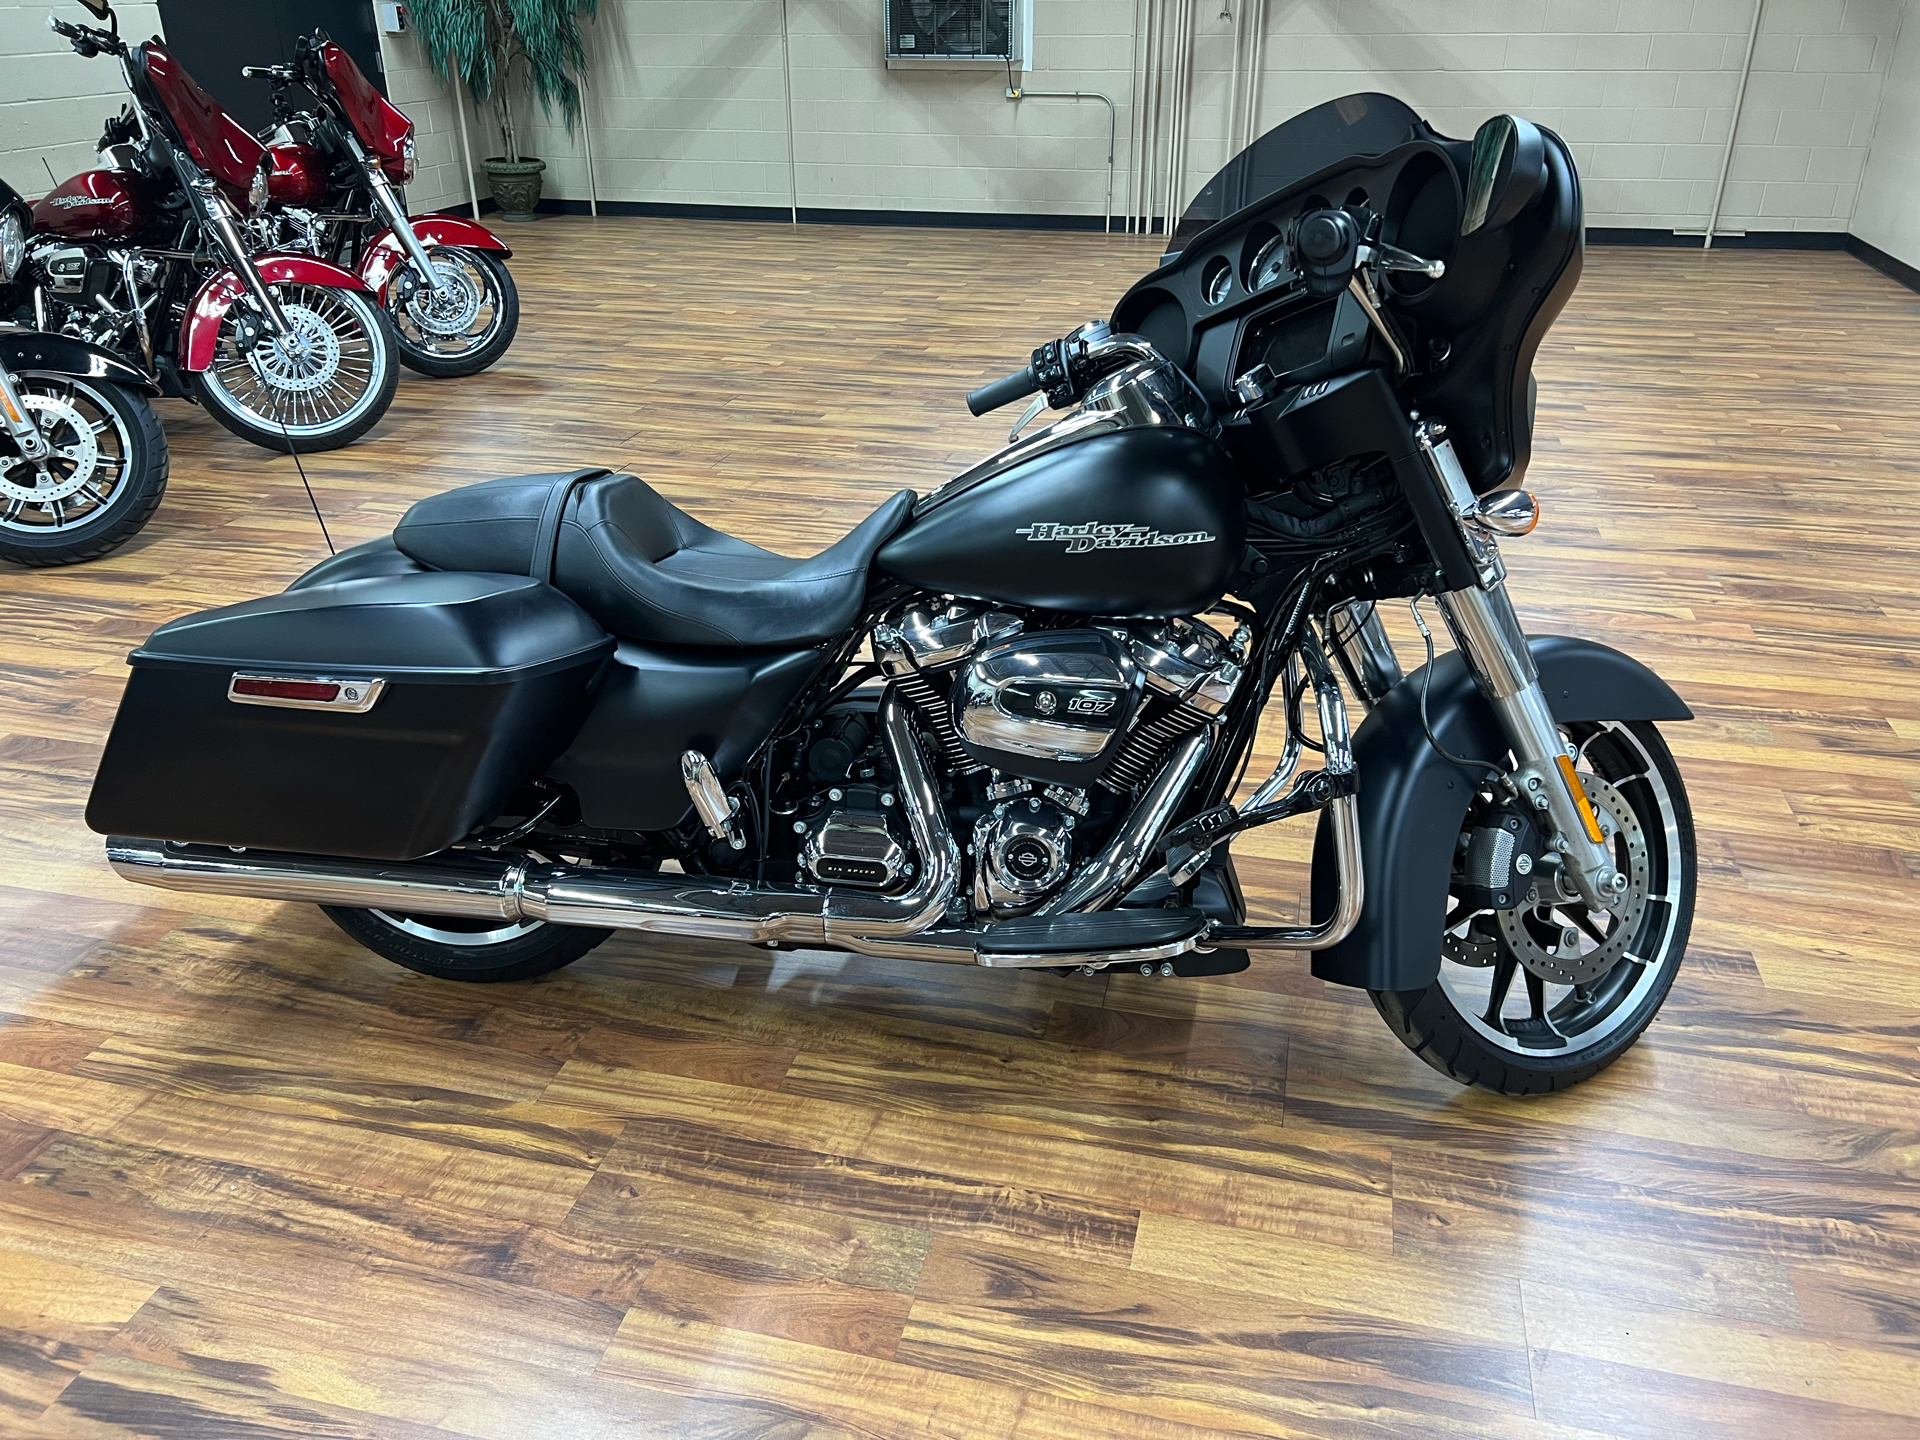 2020 Harley-Davidson Street Glide® in Monroe, Michigan - Photo 2